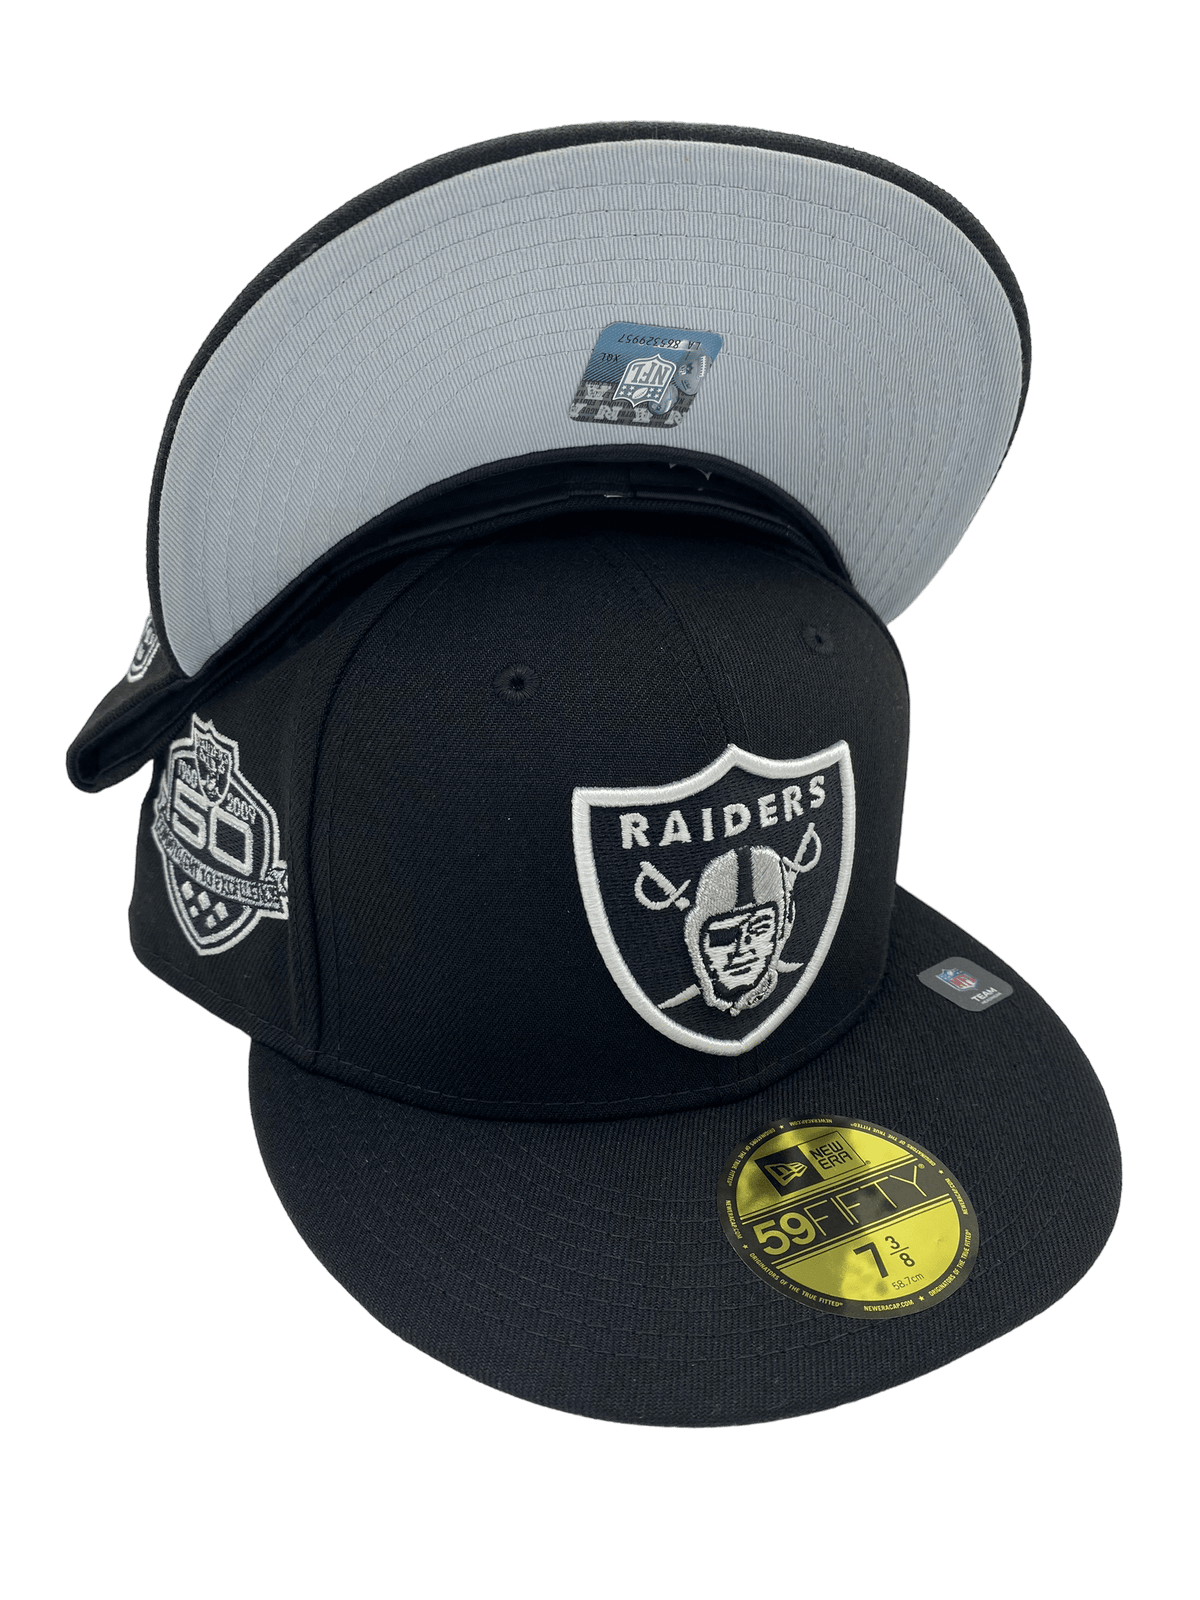 Las Vegas Raiders New Era Custom Black Pinwheel Side Patch 59FIFTY Fitted Hat, 7 3/8 / Black